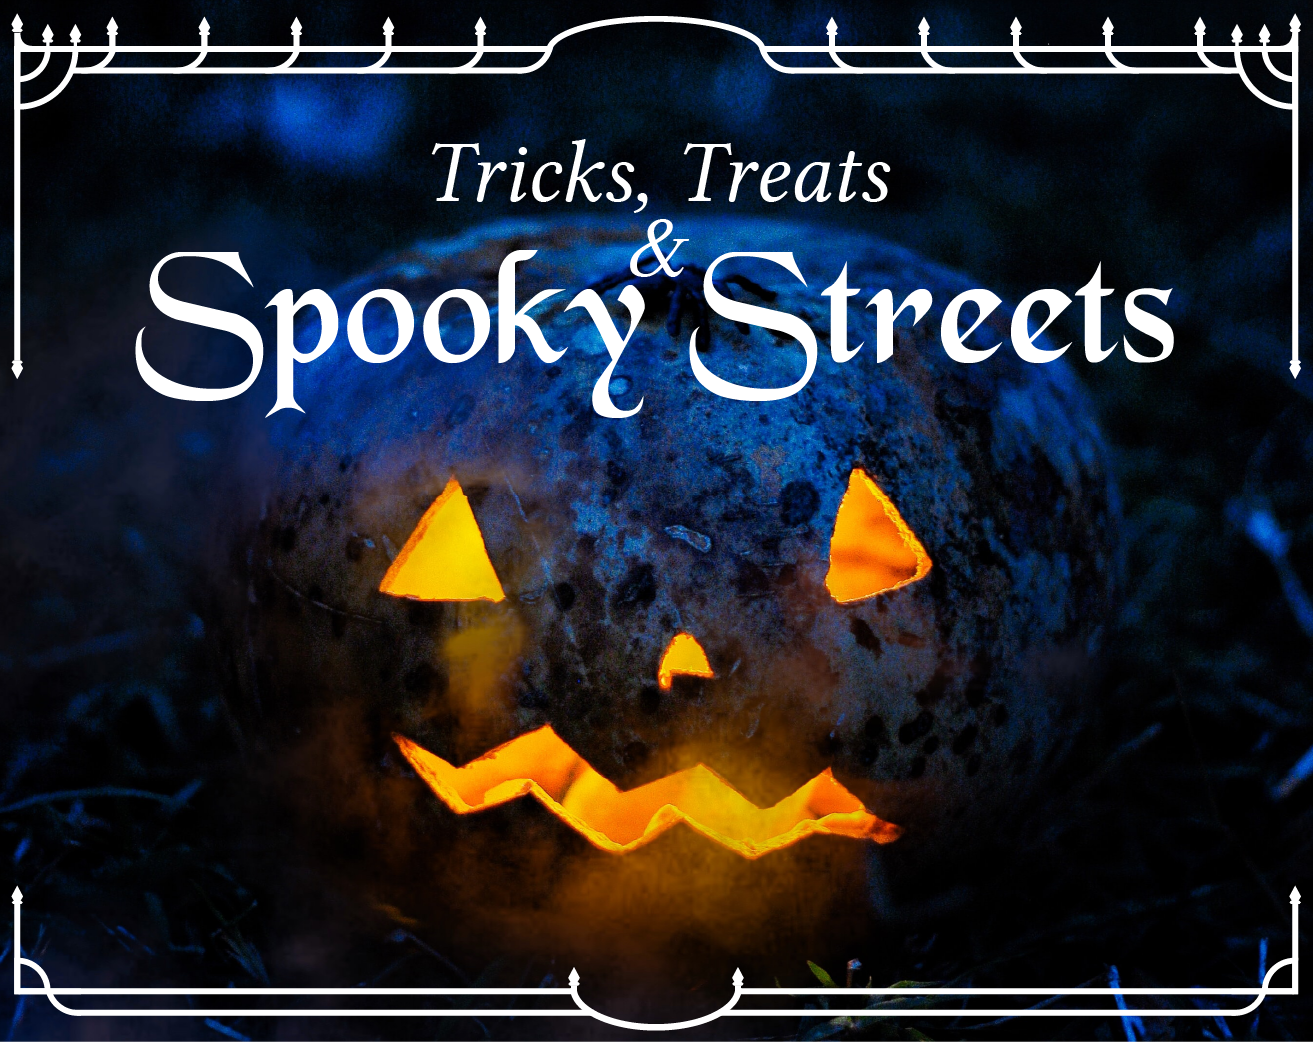 Tricks, Treats & Spooky Streets by Catscratcher Studio